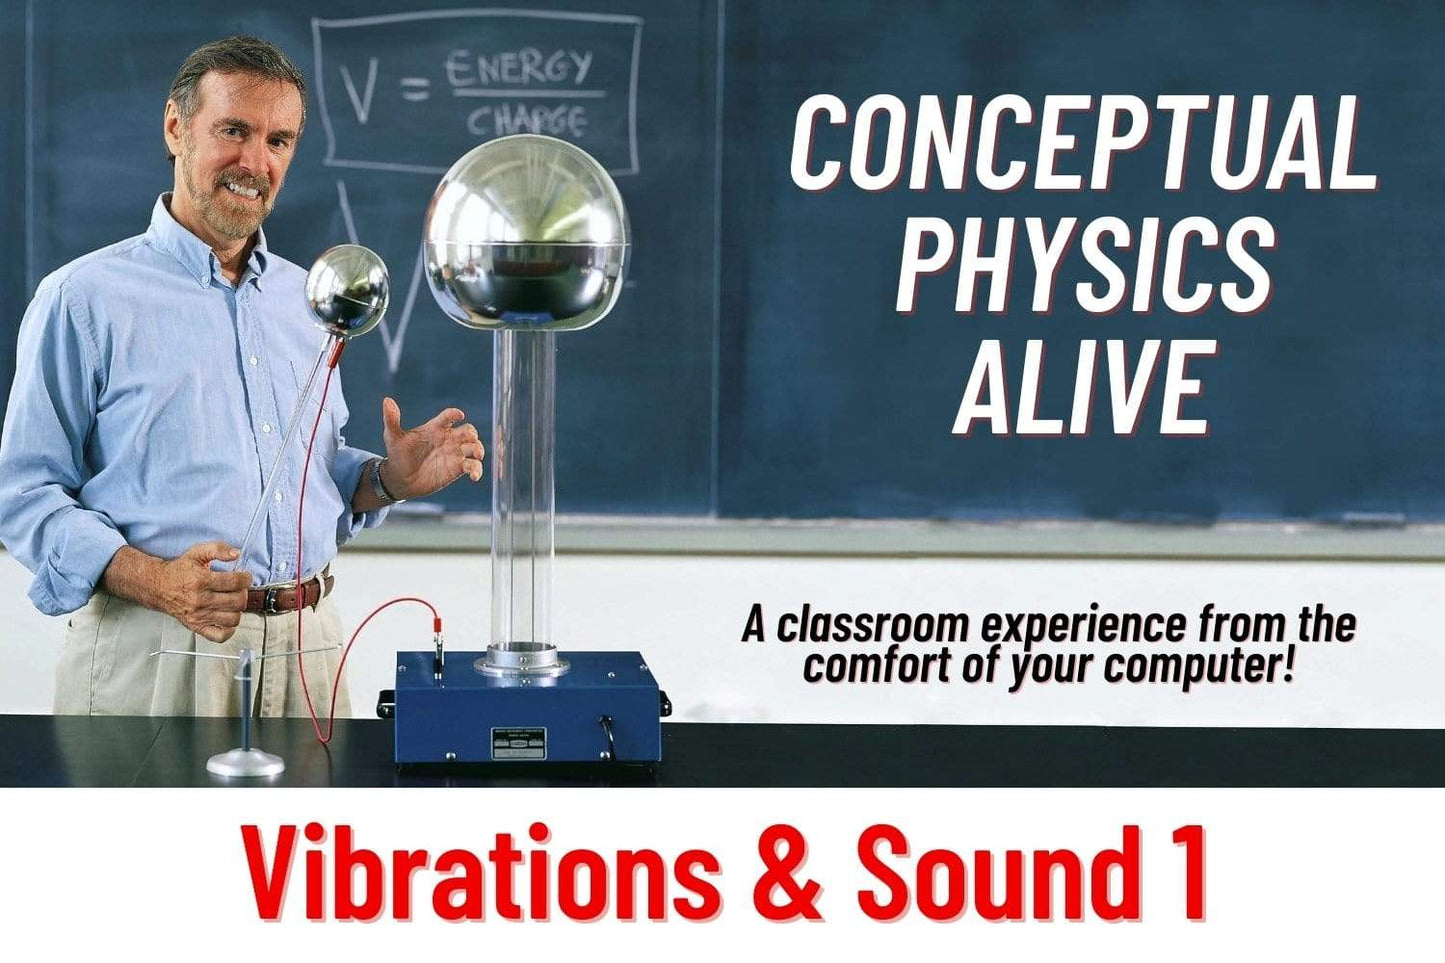 Arbor Scientific Conceptual Physics Alive: Vibrations & Sound 1